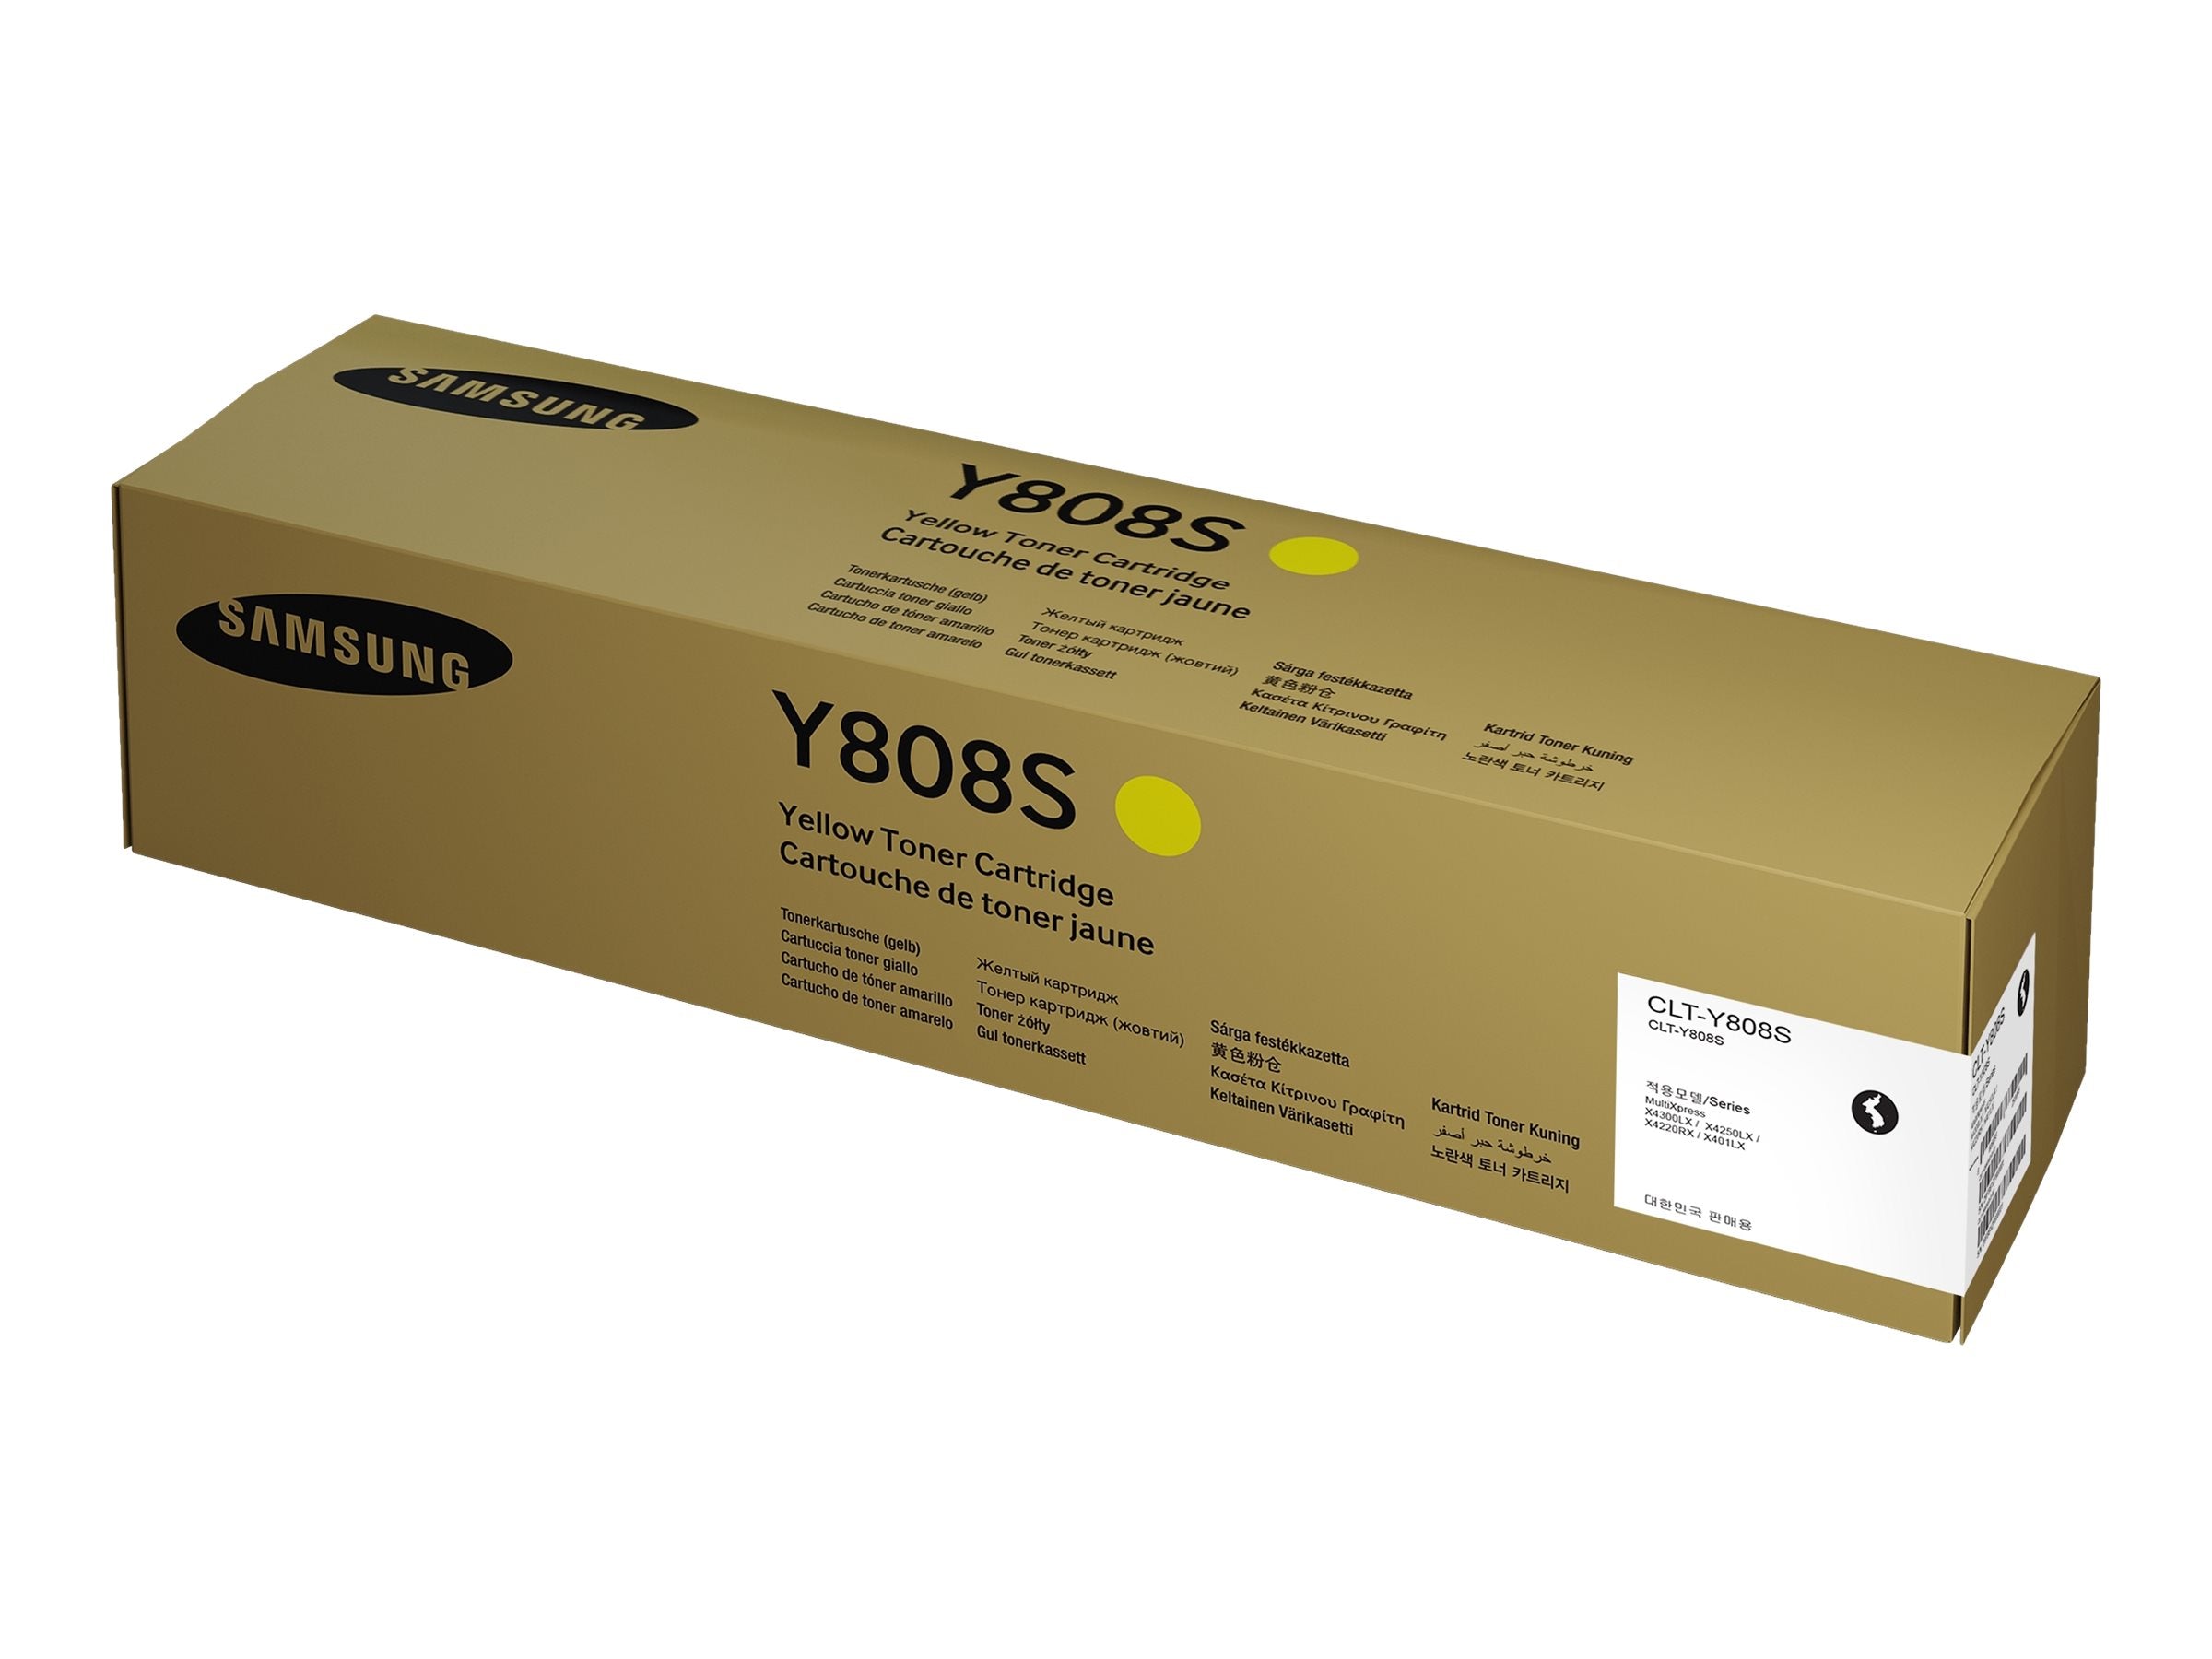 Samsung 808 Toner Cartridge for  MultiXpress X4300  X4250  X4220